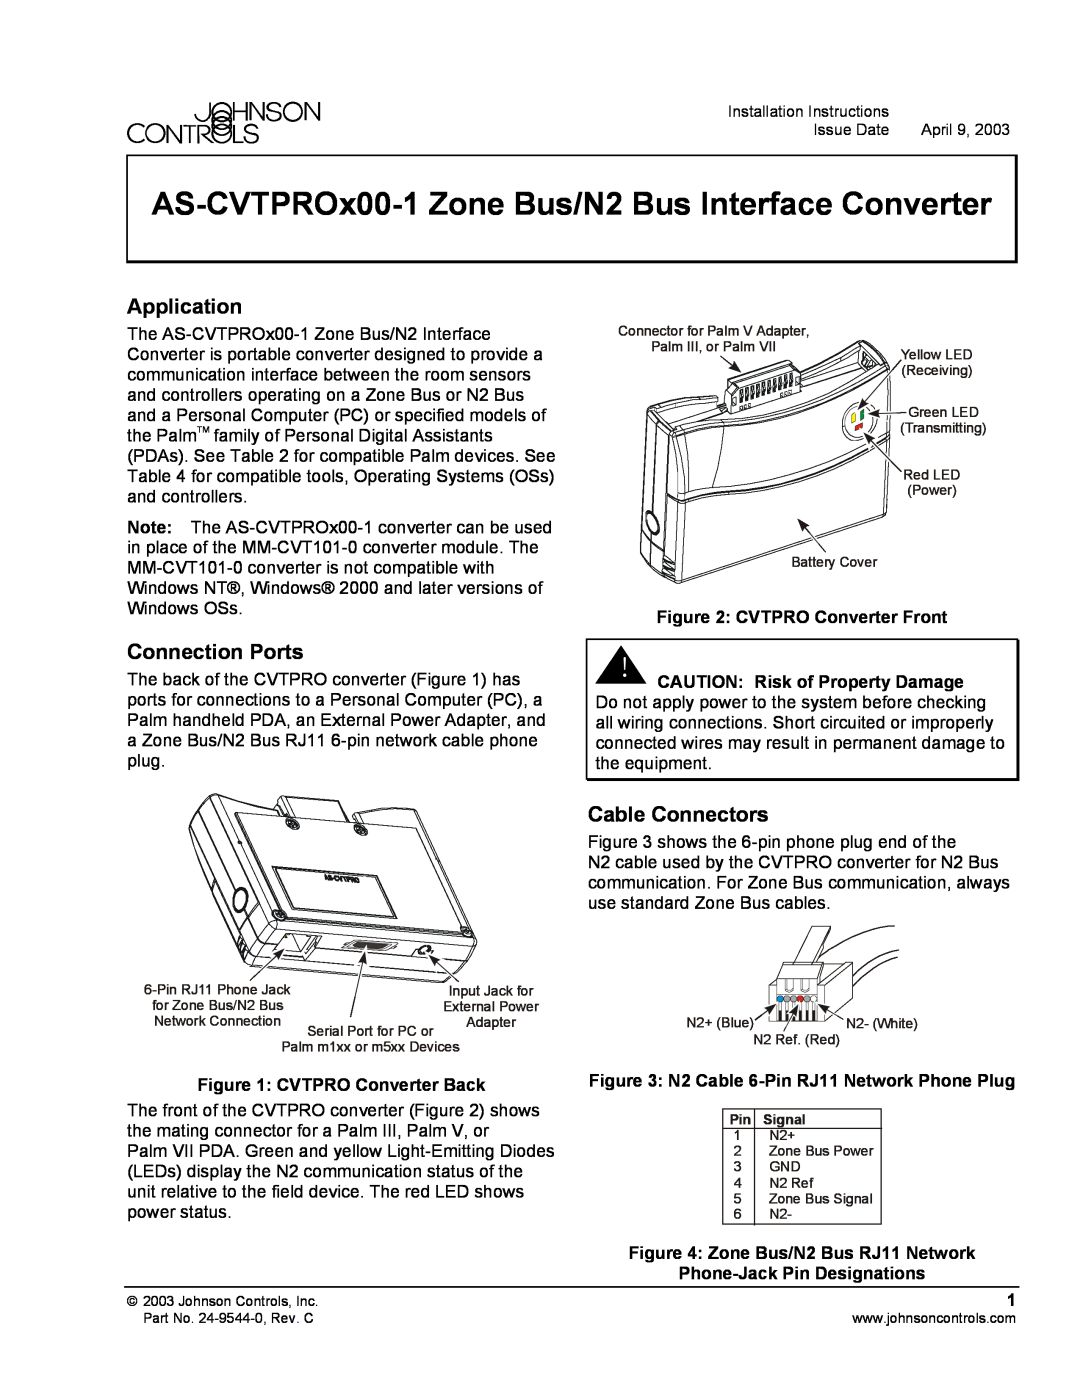 Johnson Controls AS-CVTPROx00-1 manual Application, Connection Ports, Cable Connectors 